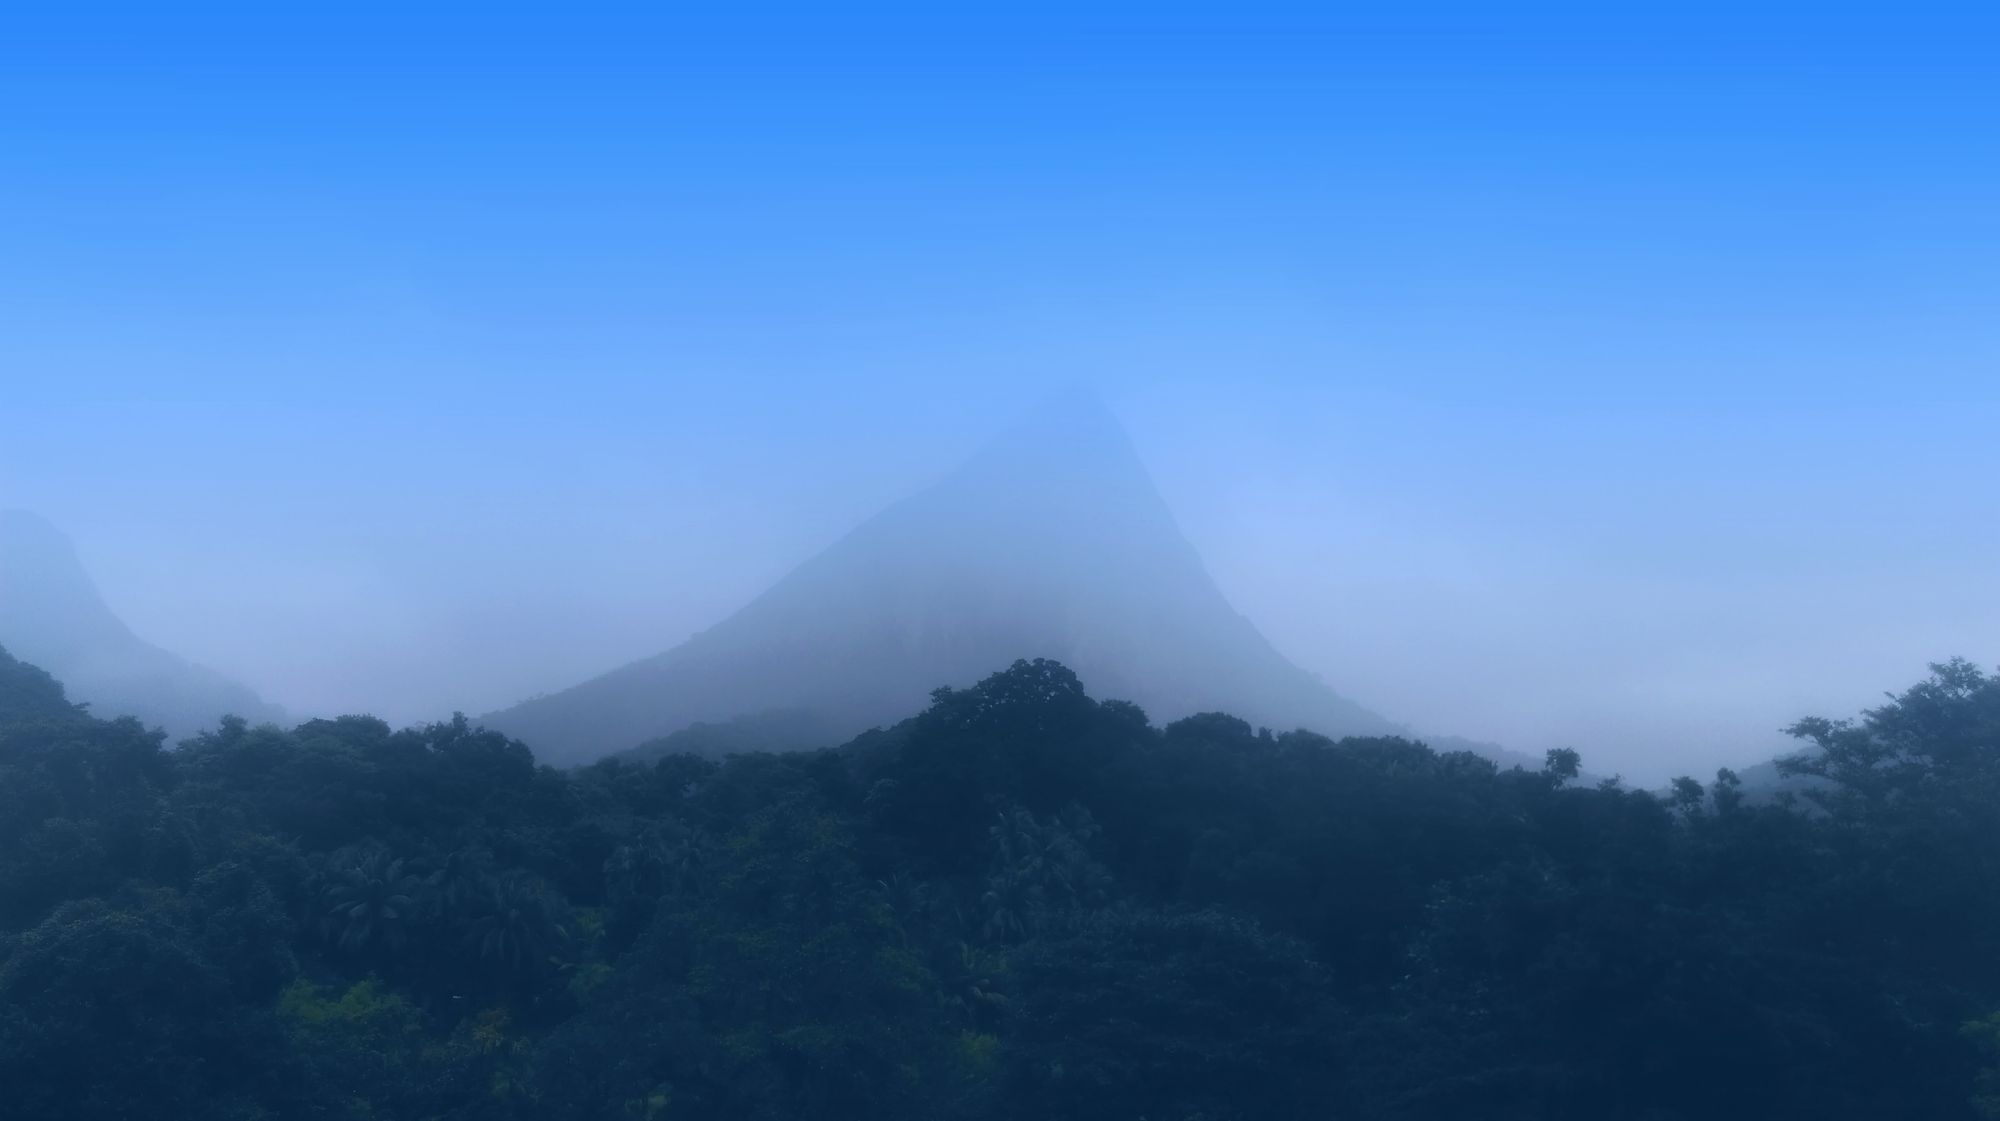 Lakegala Mountain in Meemure, Sri Lanka, covered in a blanket of mist